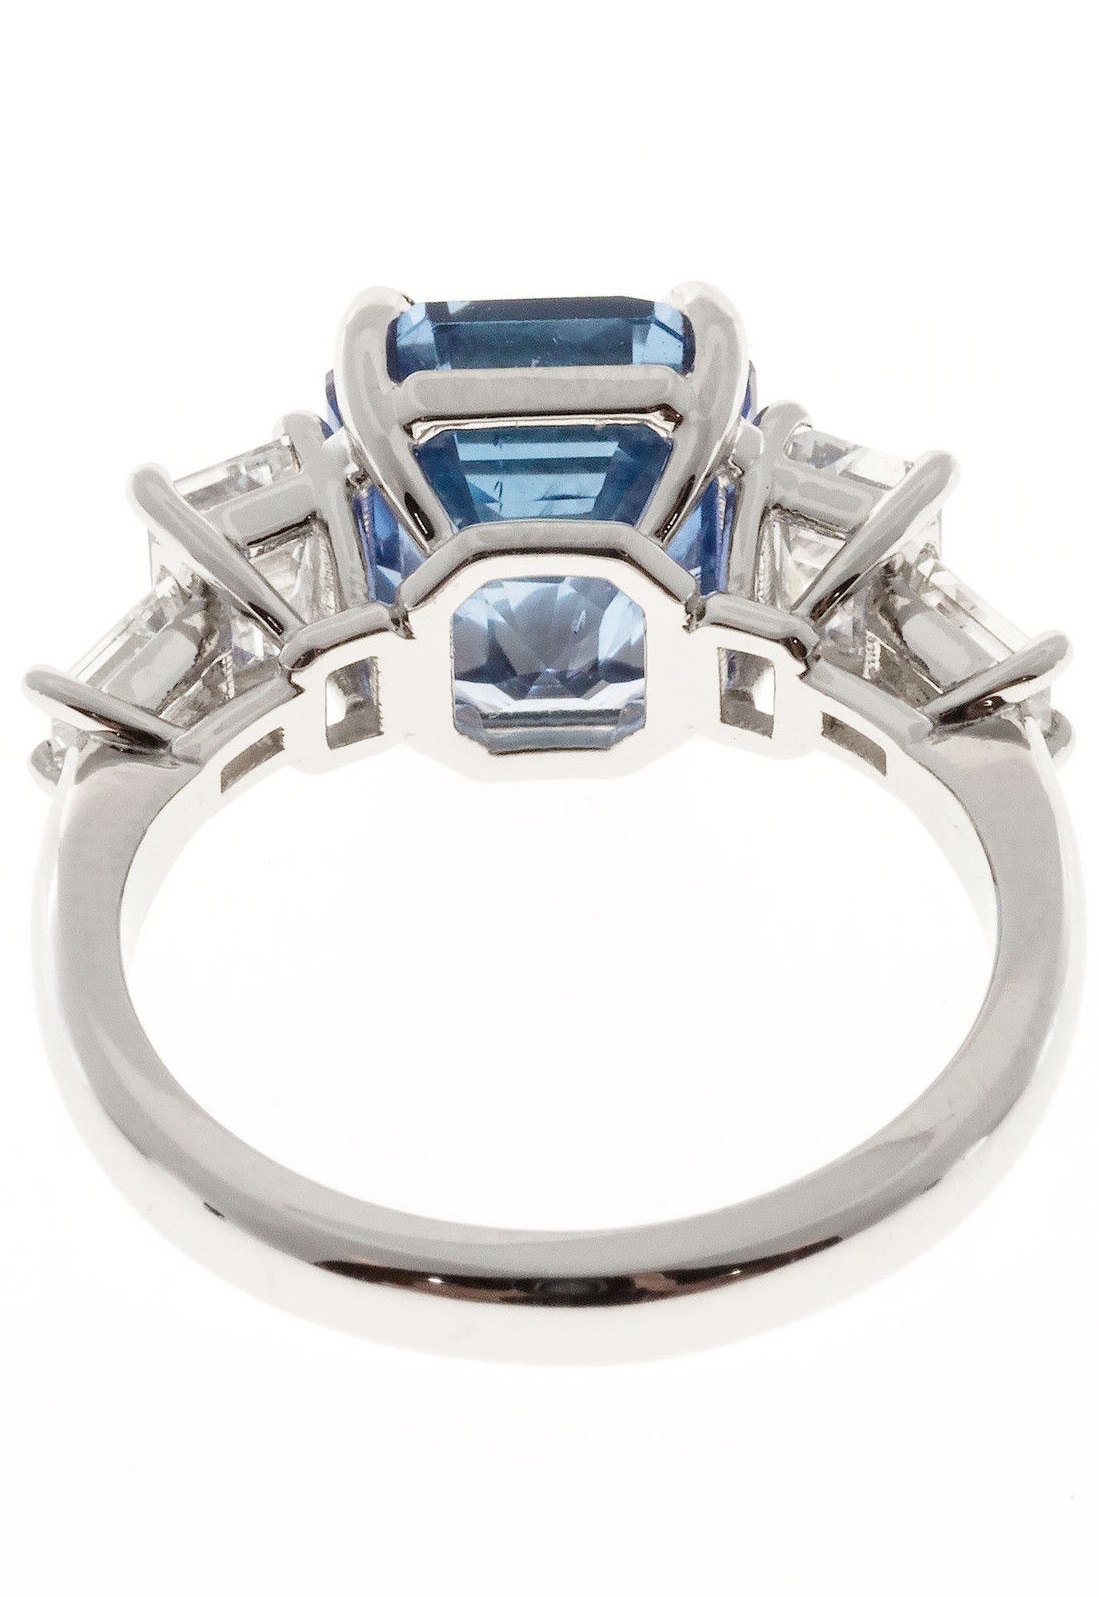 Natural Emerald Cut Sapphire Diamond Engagement Ring Platinum